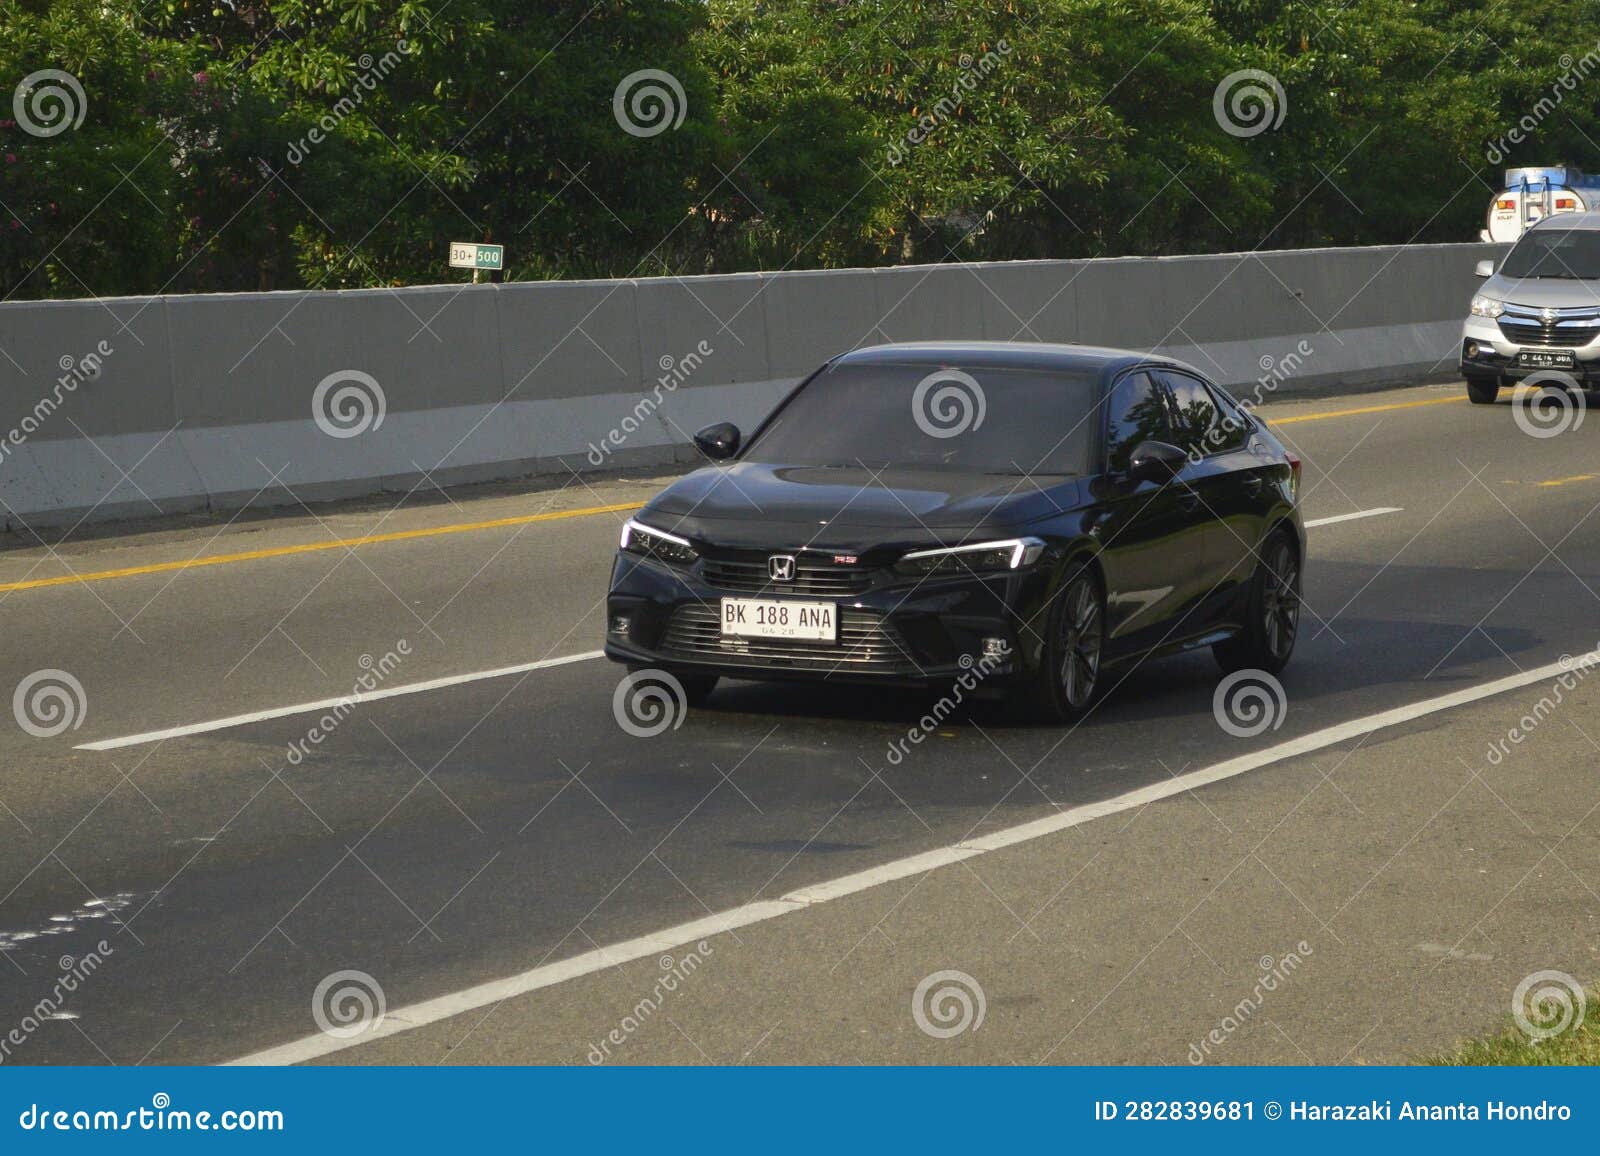 Honda Civic RS 2023 editorial photo. Image of auto, private - 282839681